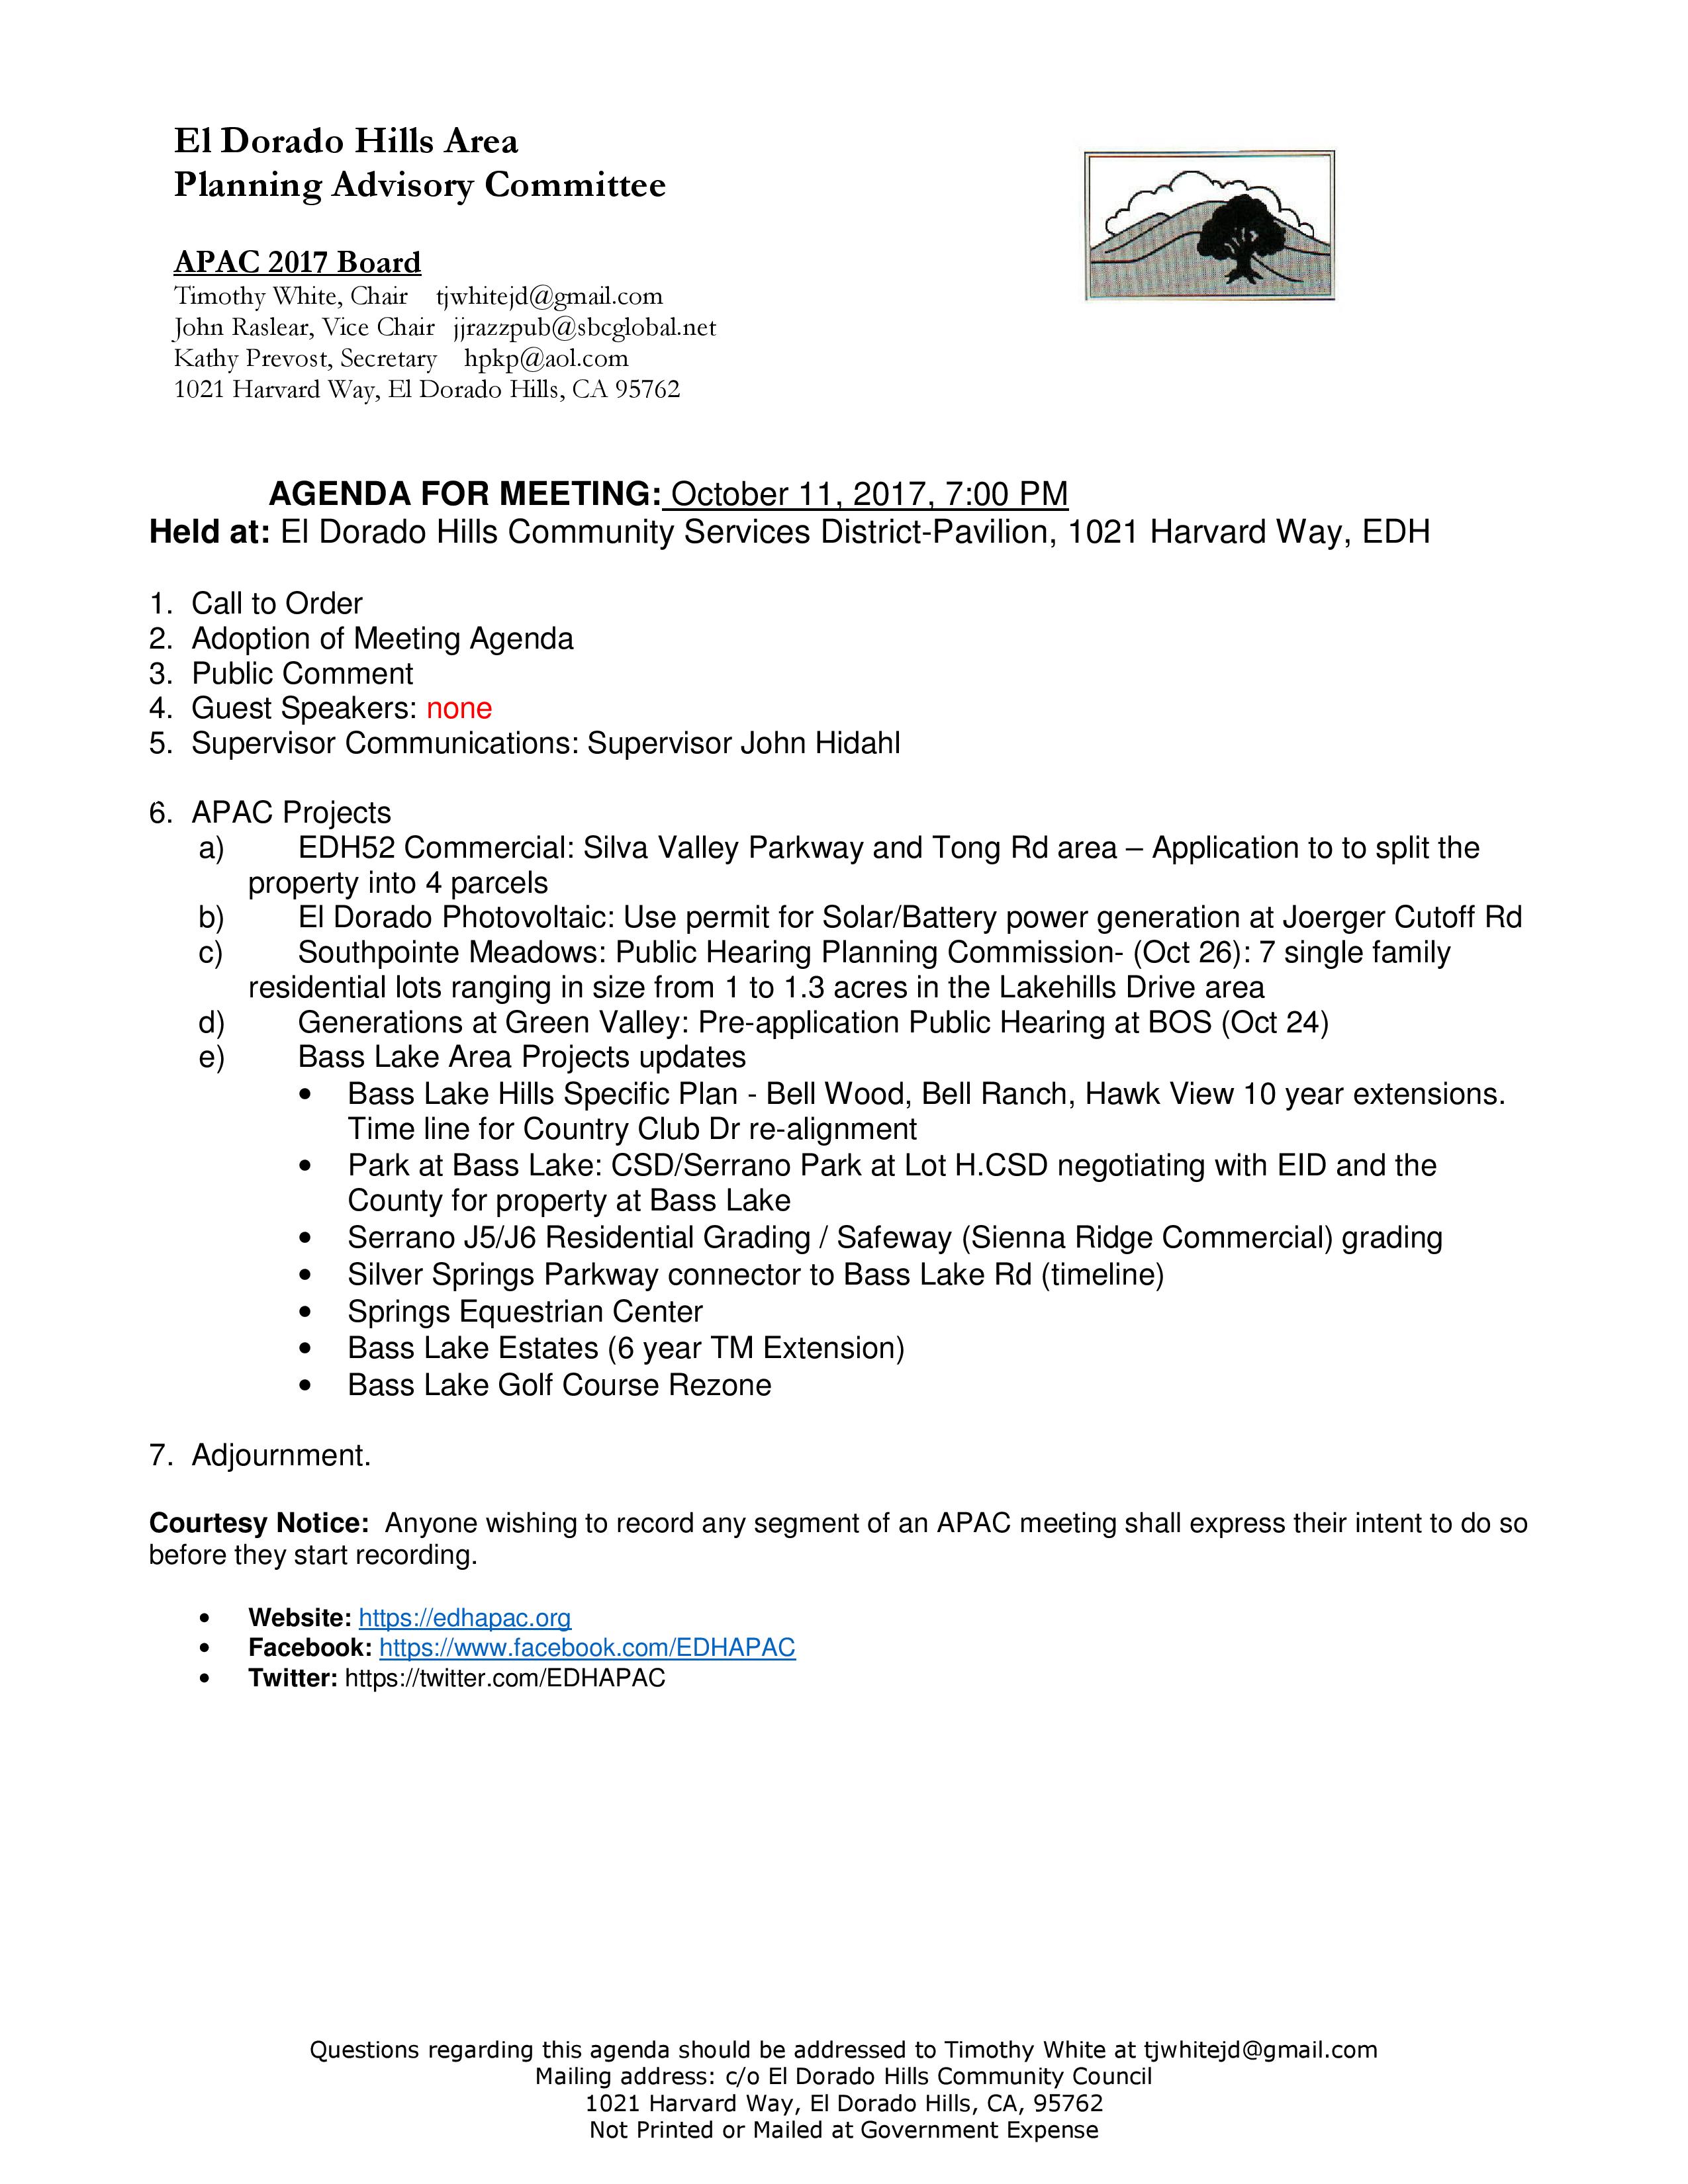 Ochtend gymnastiek terrorist niemand EDH APAC October 11 2017 Meeting Agenda Now Online - El Dorado Hills Area  Planning Advisory Committee